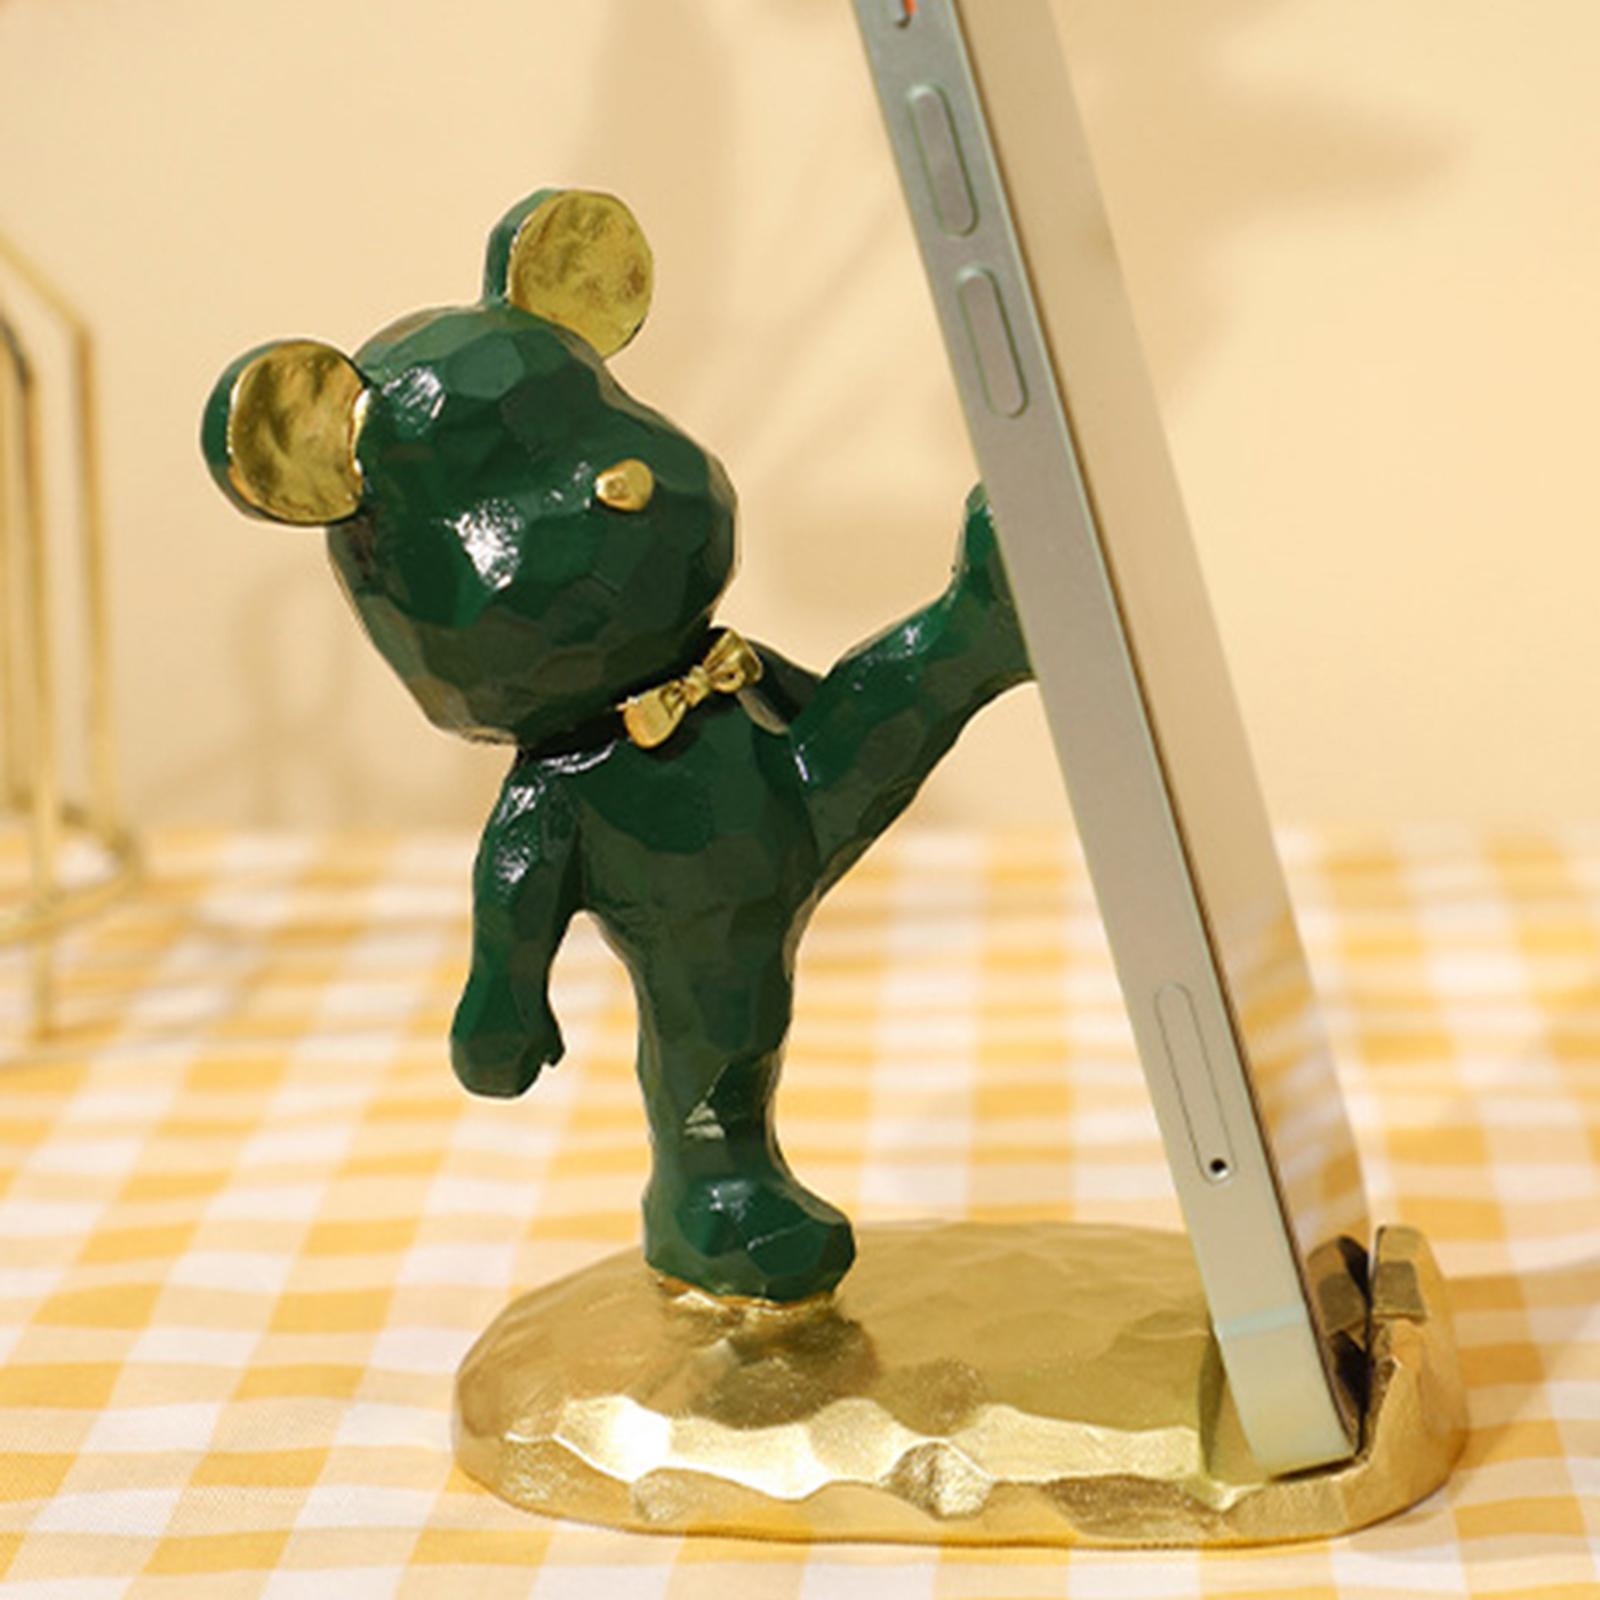 Unique Bear Sculpture Mobile Phone Stand Toys for Desk Decorations Smartphone Car